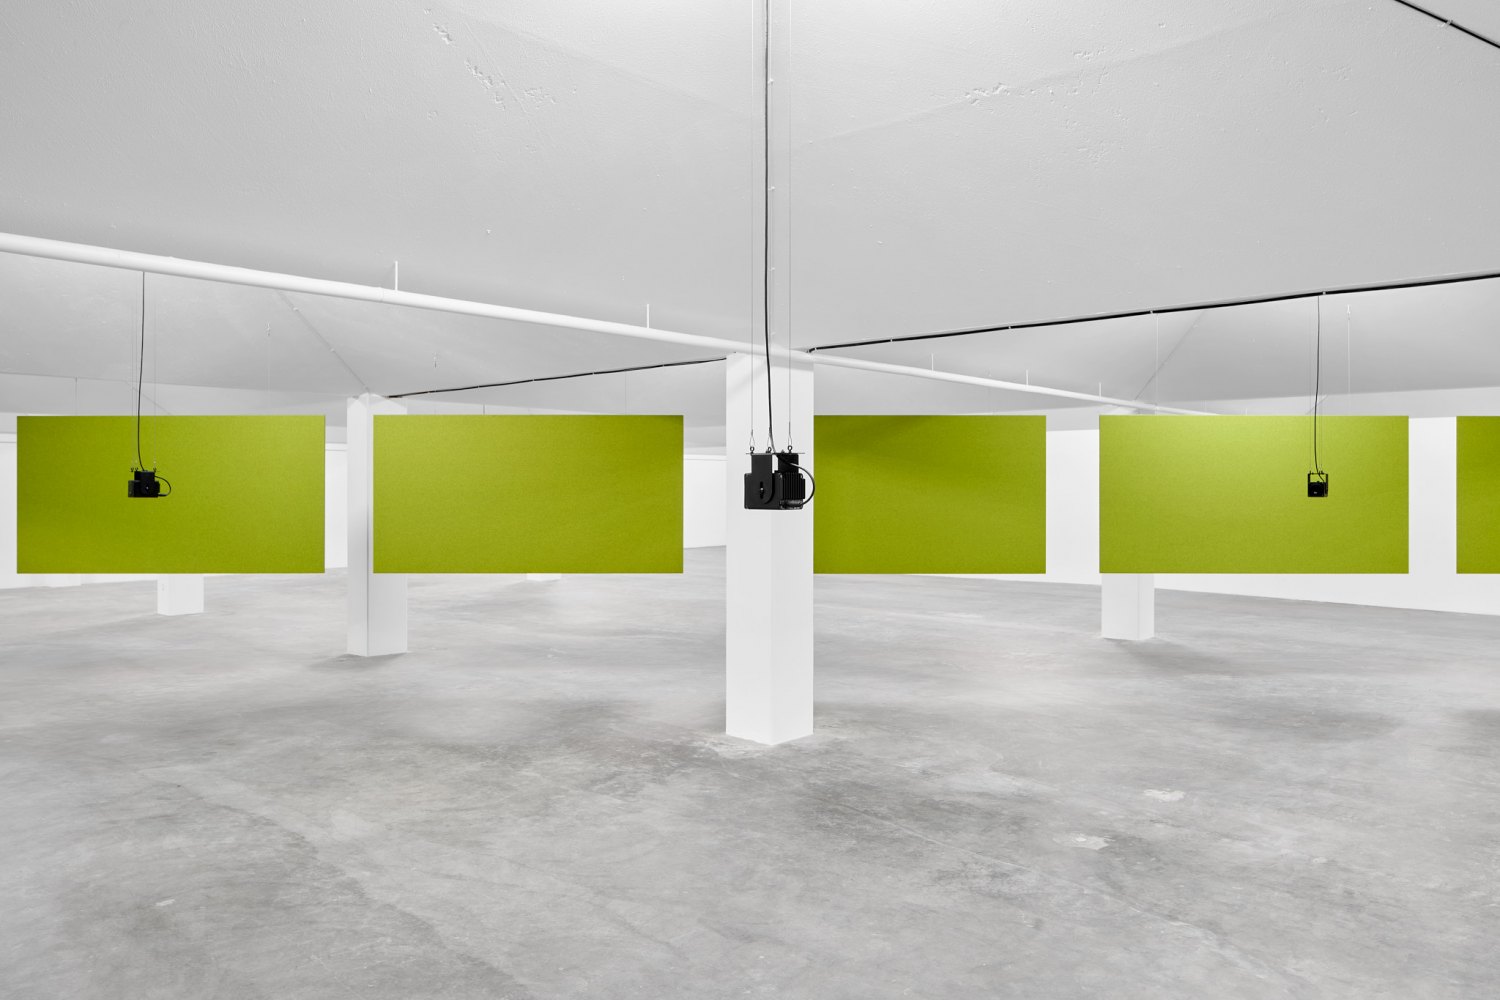 Florian Hecker, Formulations As Texture, horizontal and vertical crossings, Installation view, Simian, Copenhagen, 2022 